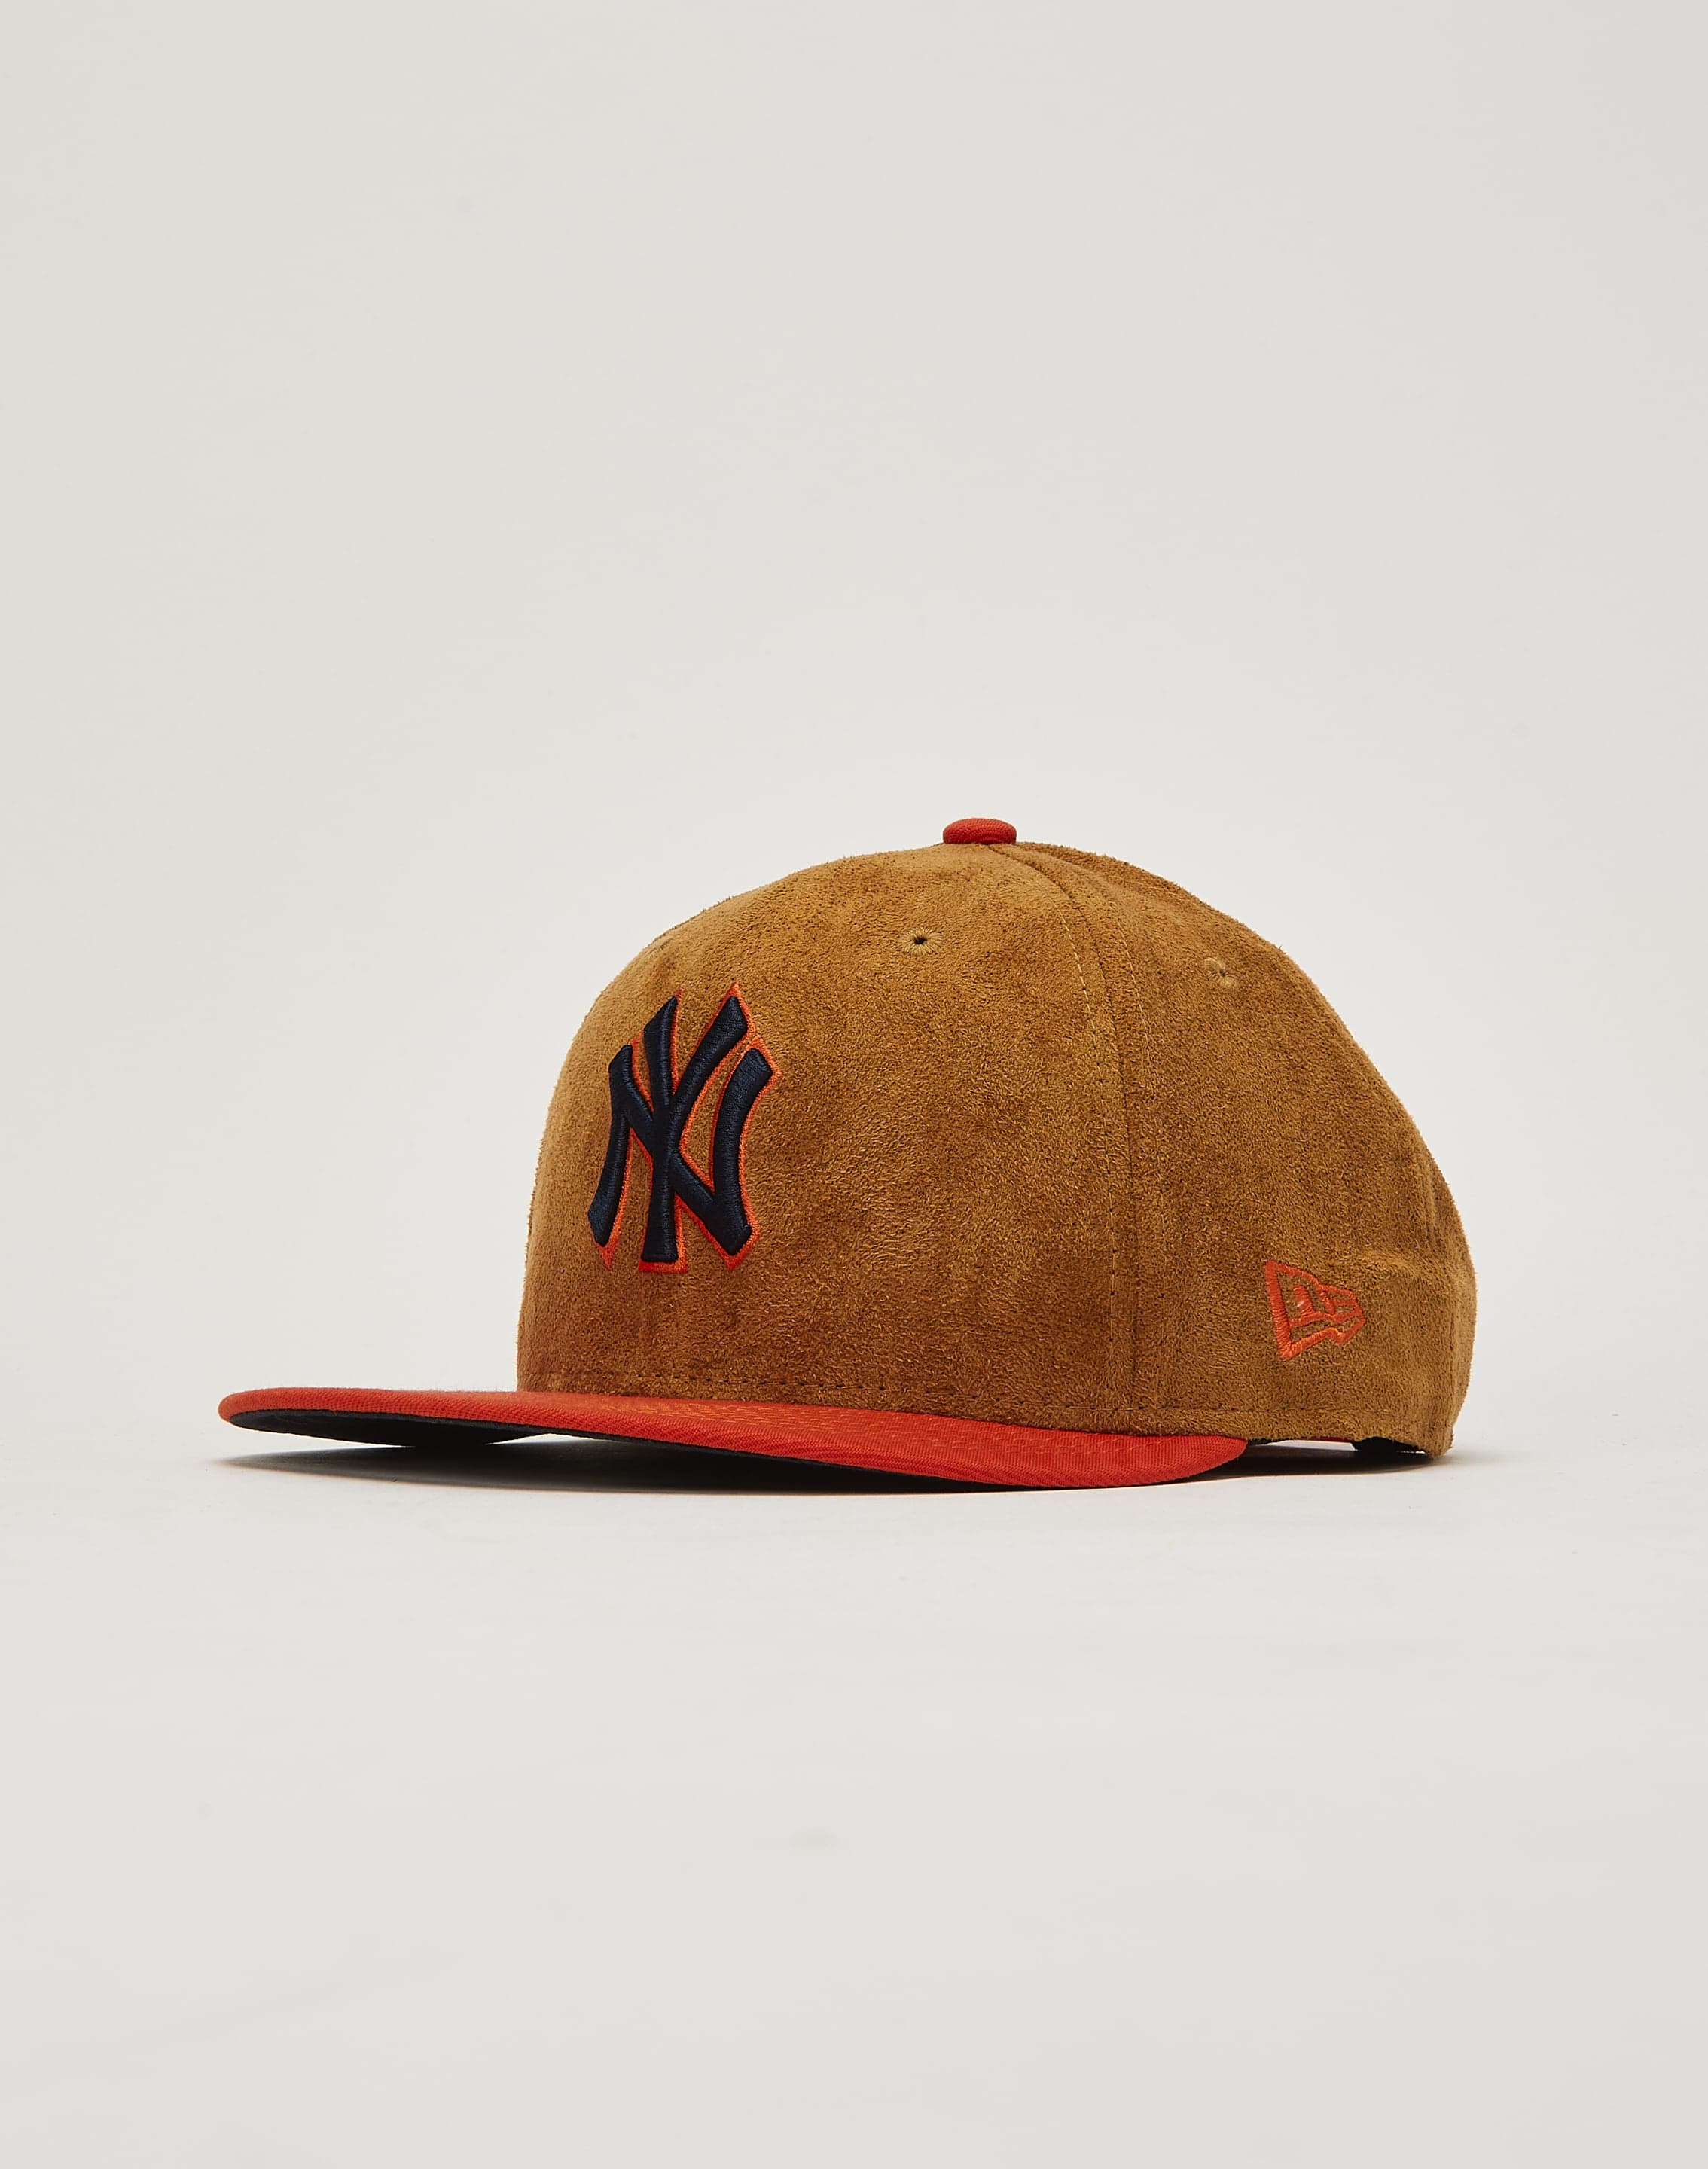 Will New Era Make a NY Yankee Hat With No Brim?